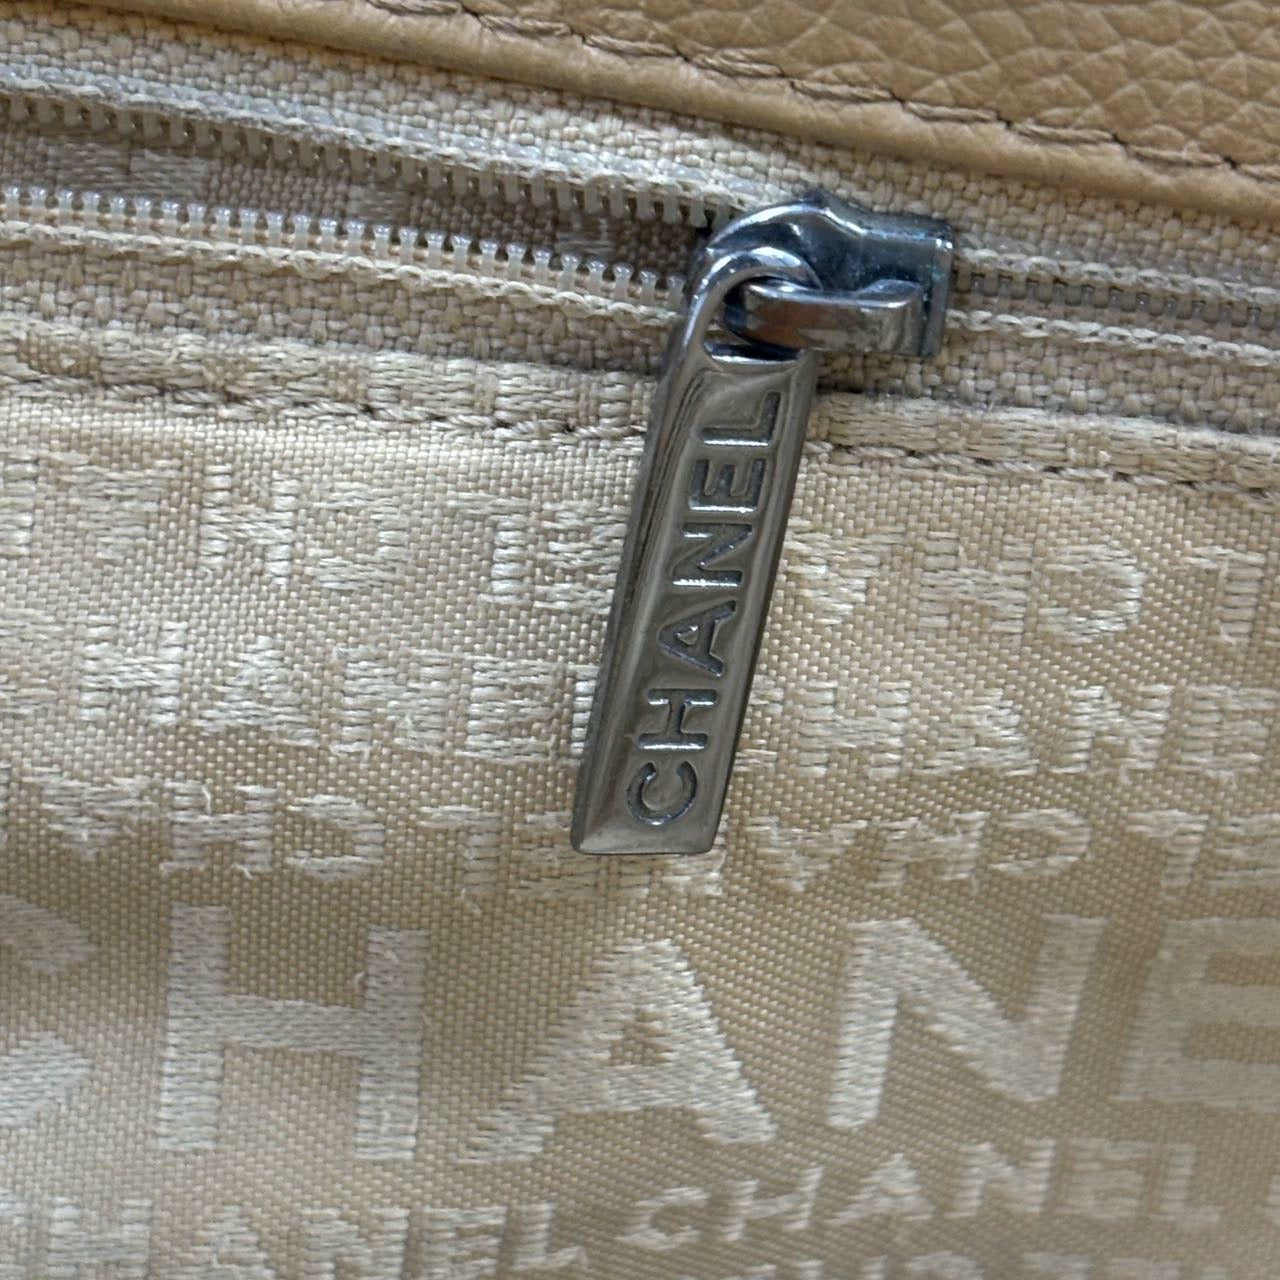 Chanel Cerf Executive 2005 East West Small Camel Caviar Leather Handbag